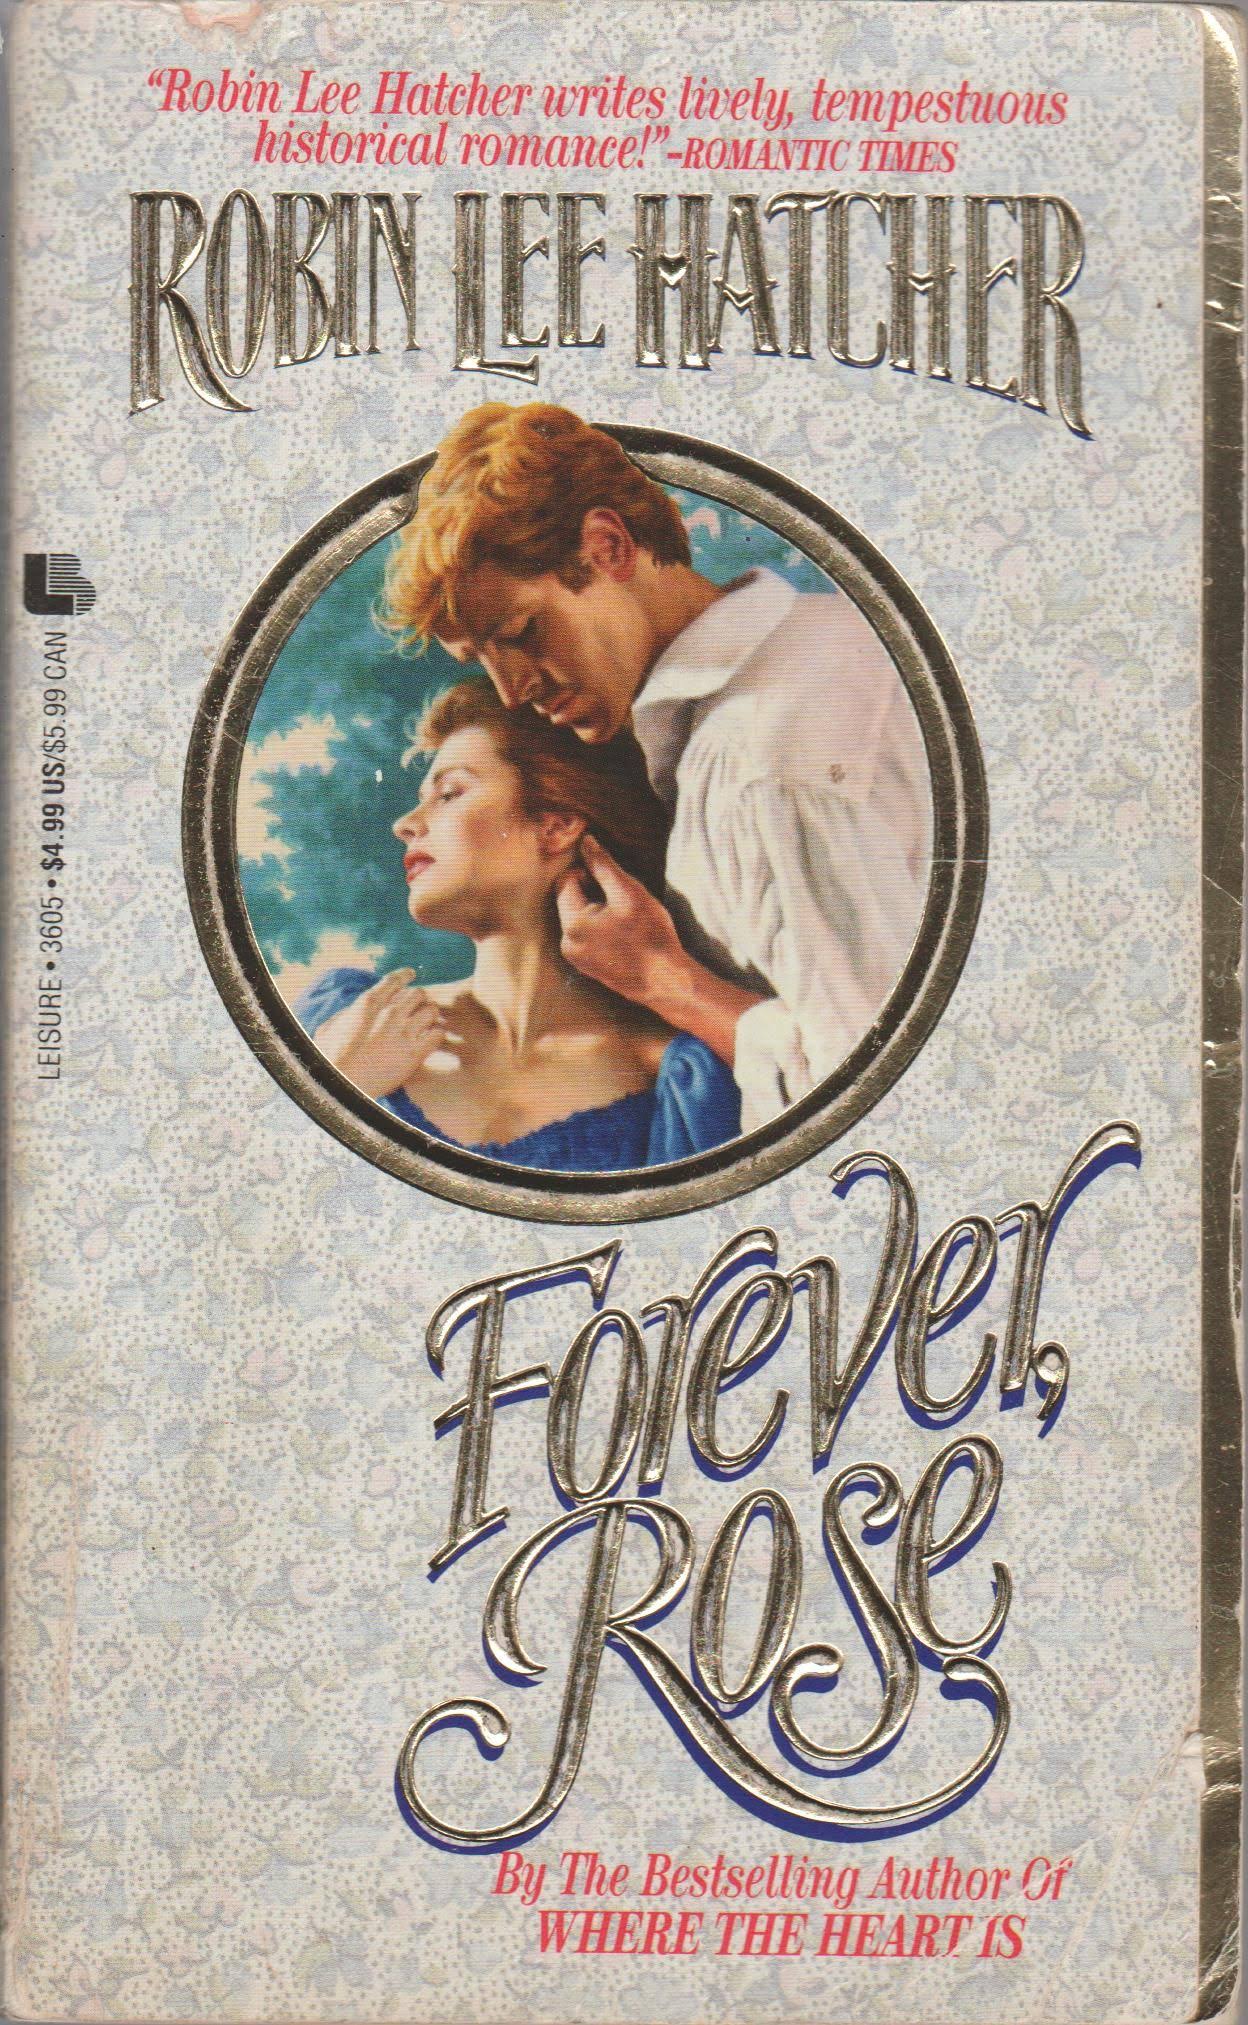 Forever, Rose [Book]